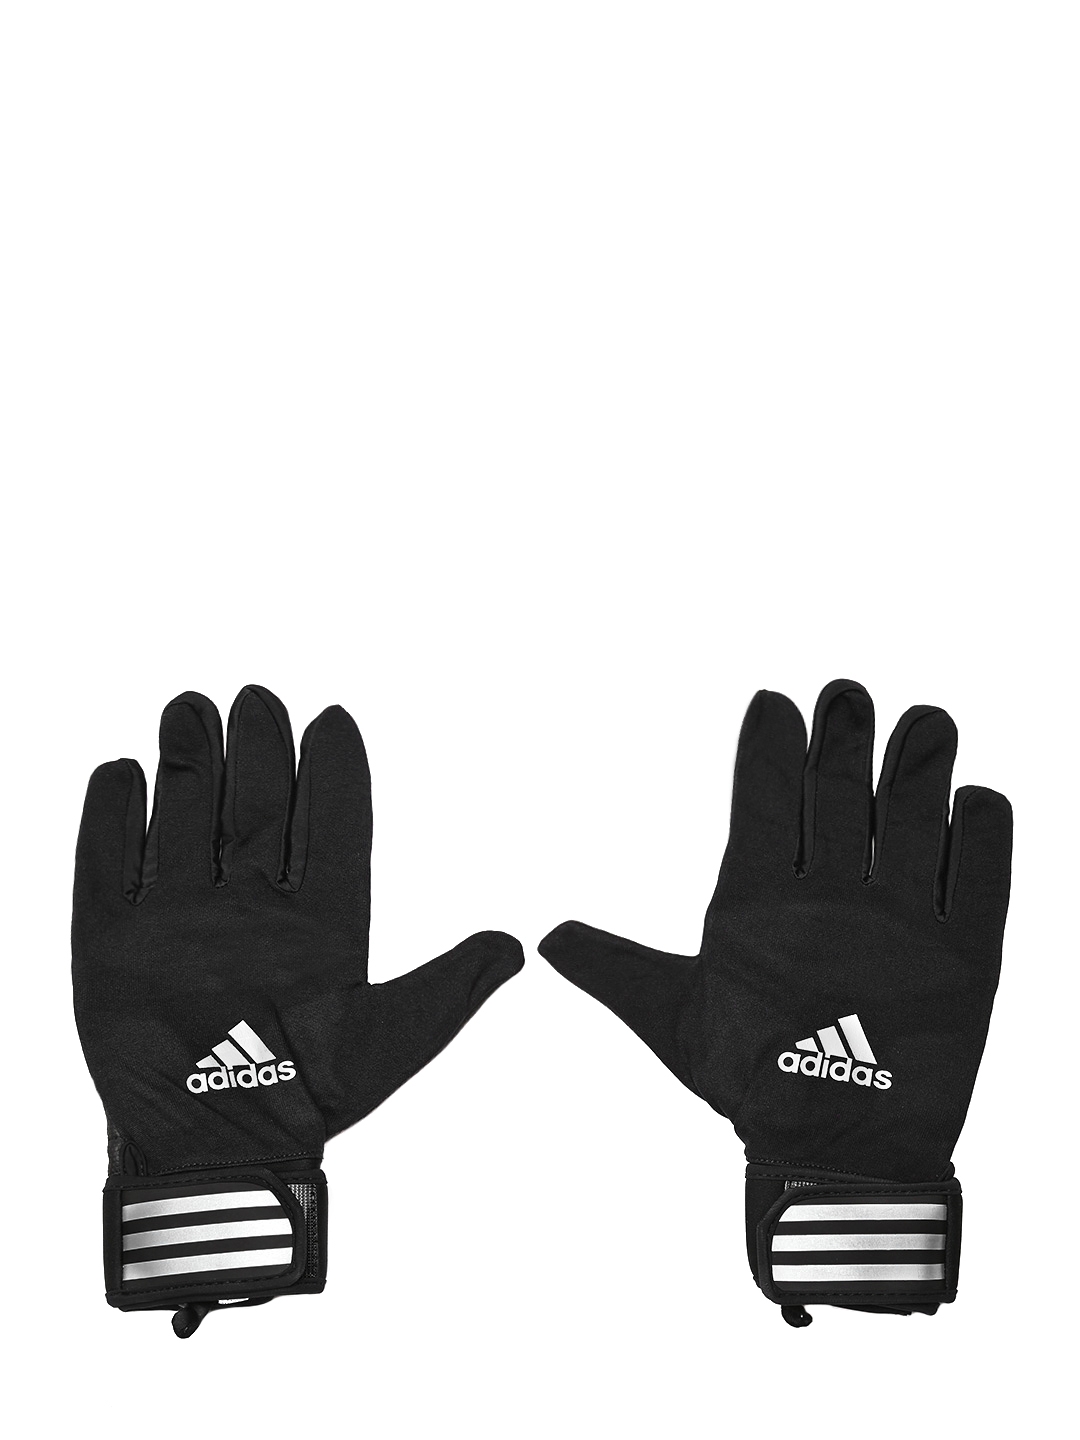 adidas outdoor training gloves